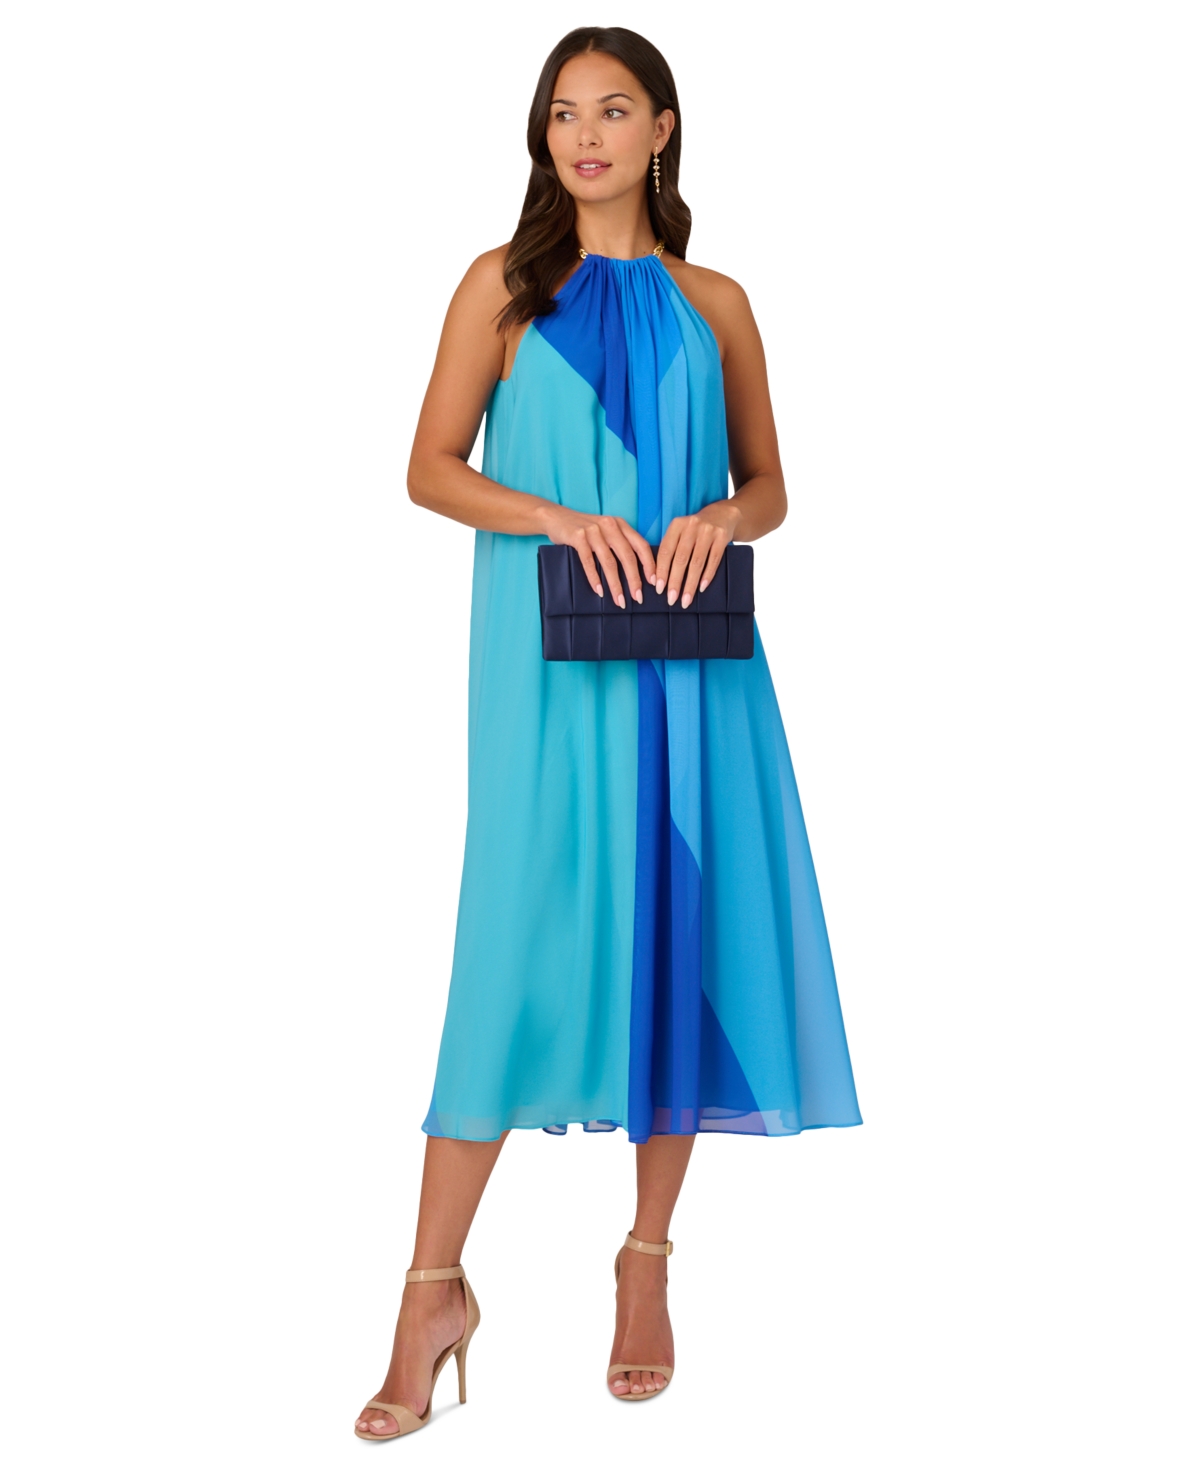 Women's Colorblocked Halter Dress - Blue Multi